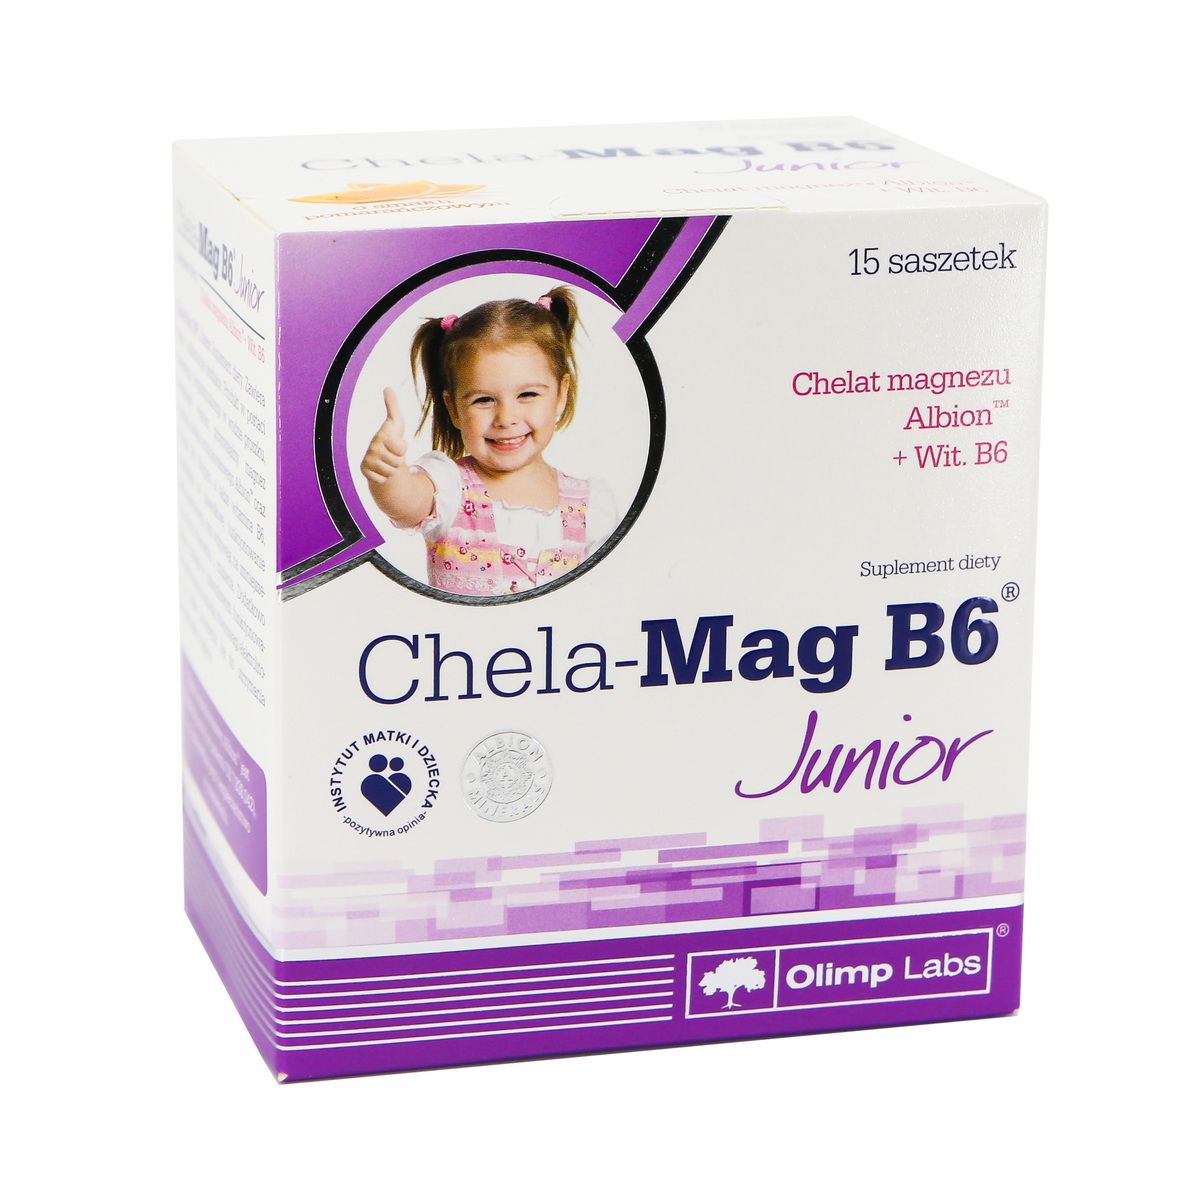 Chela-Mag B6 junior #15pack